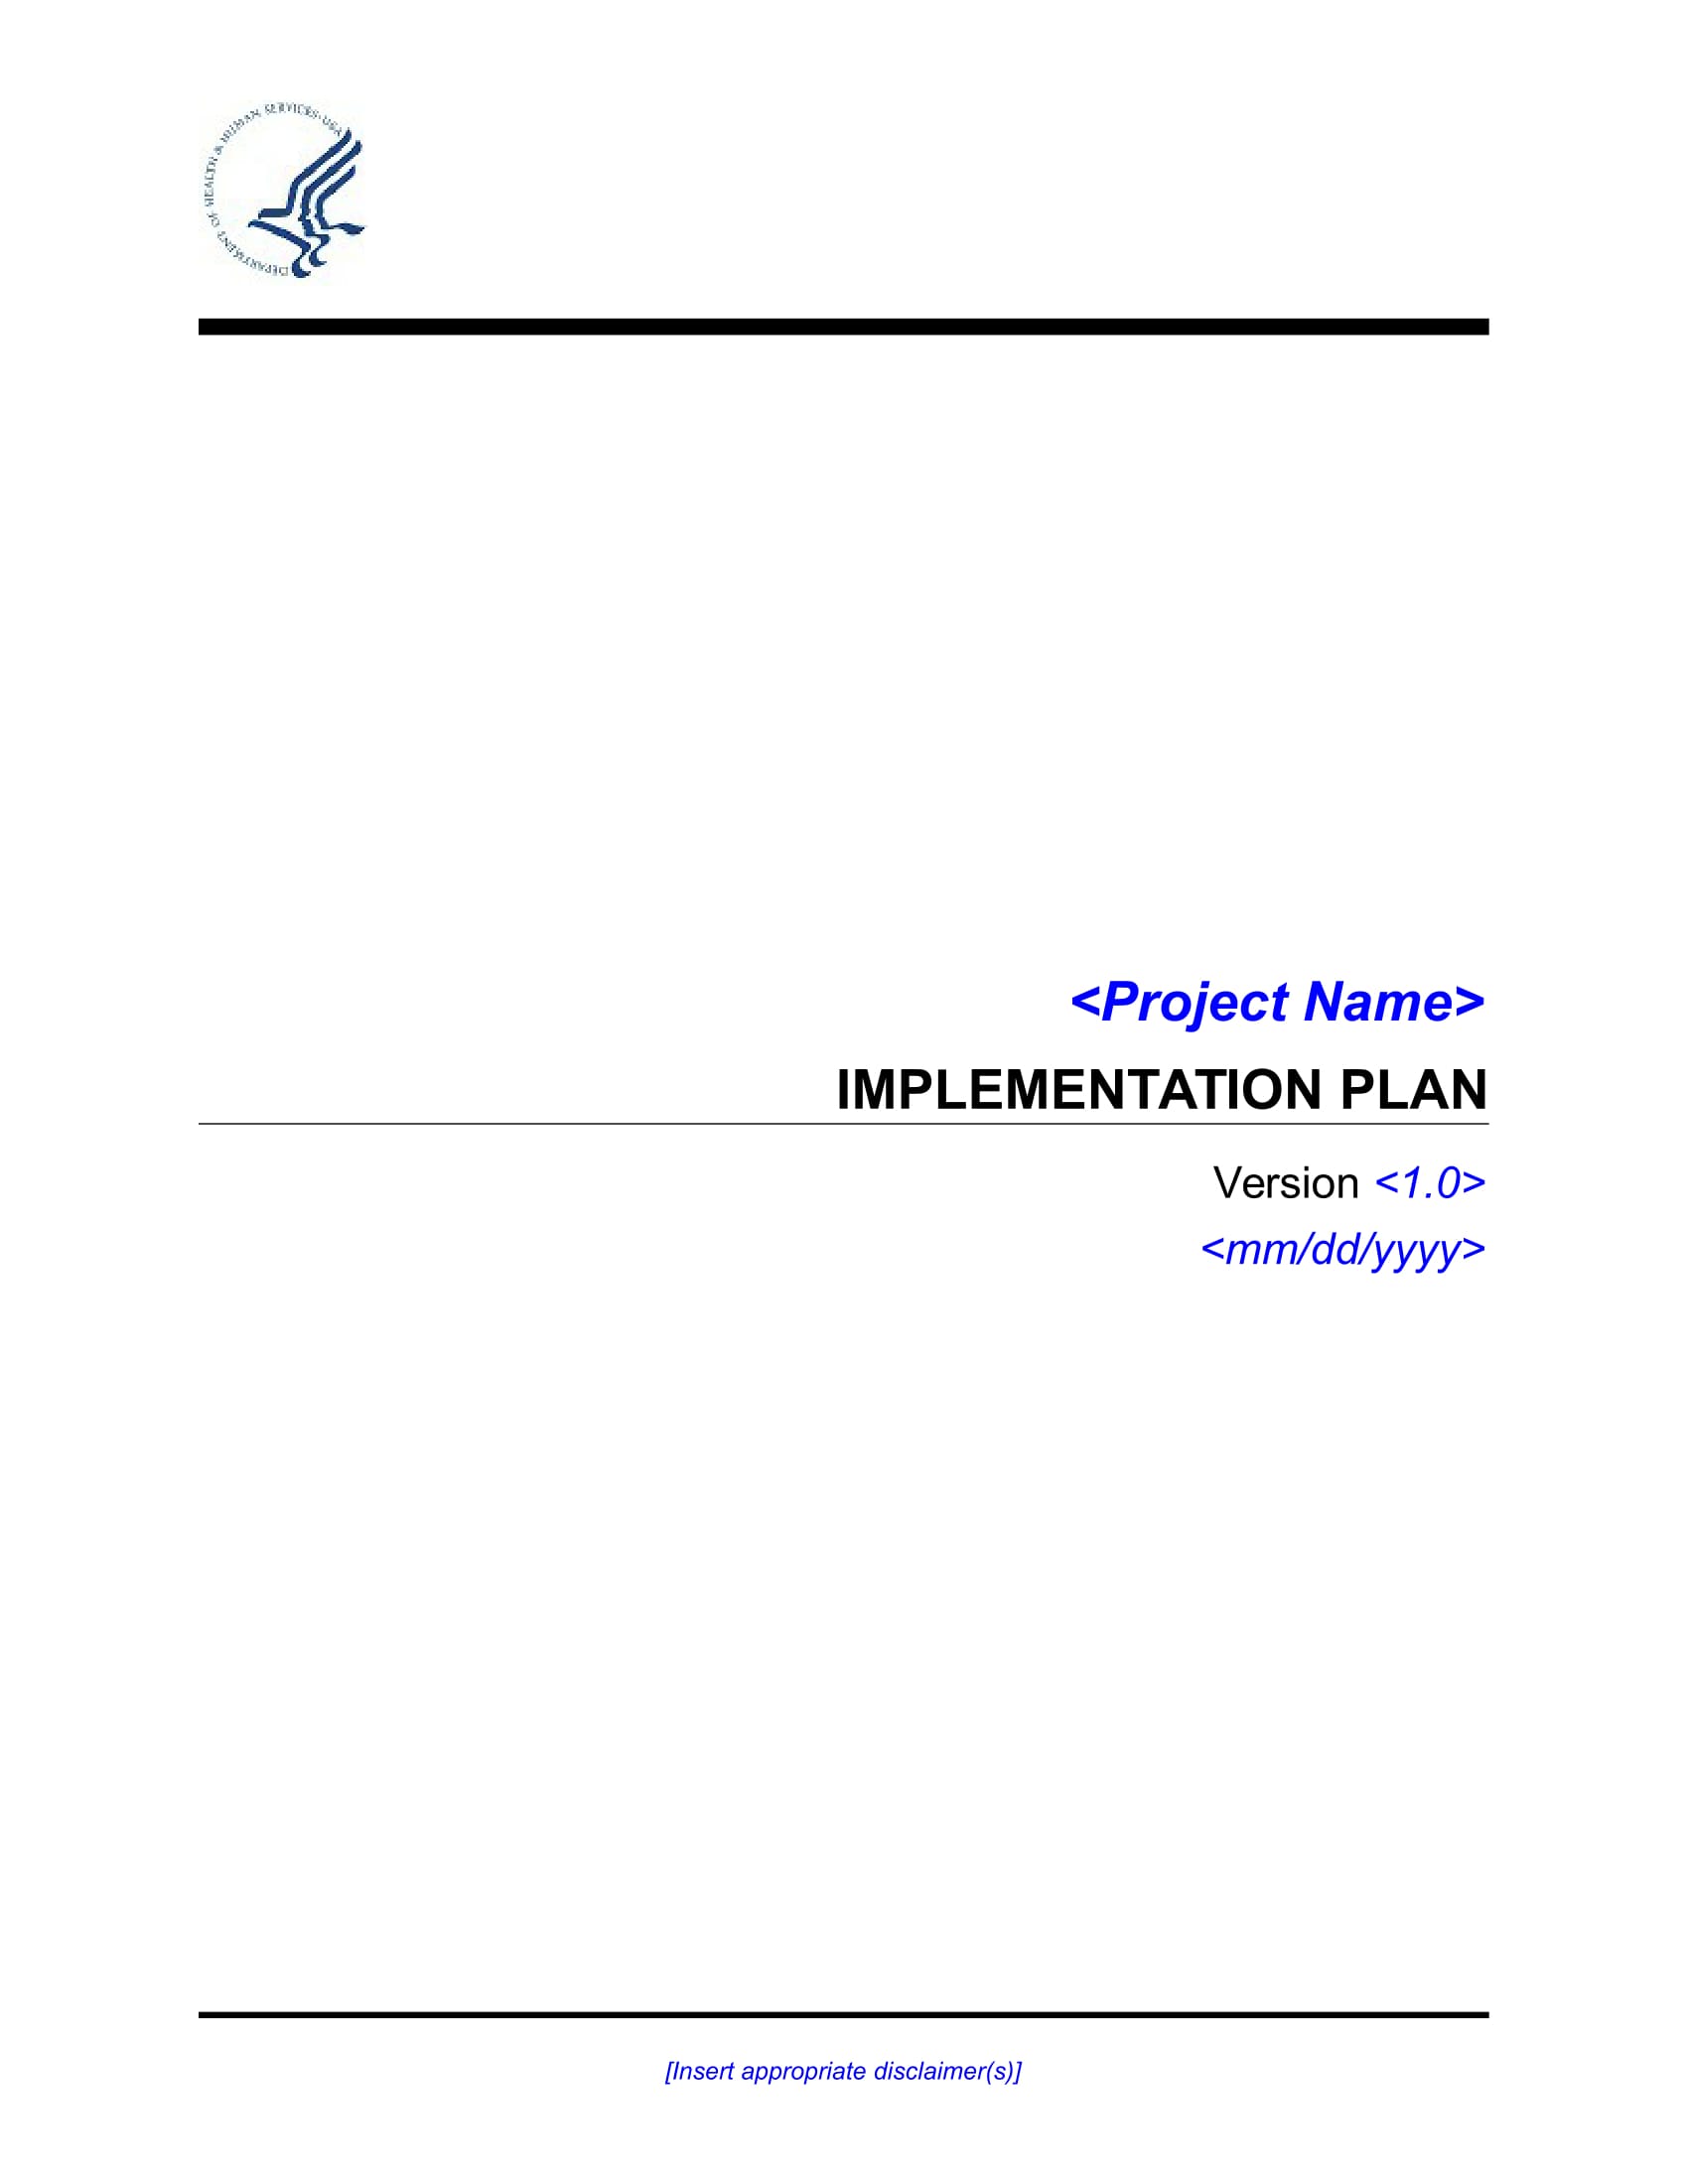 extensive implementation plan